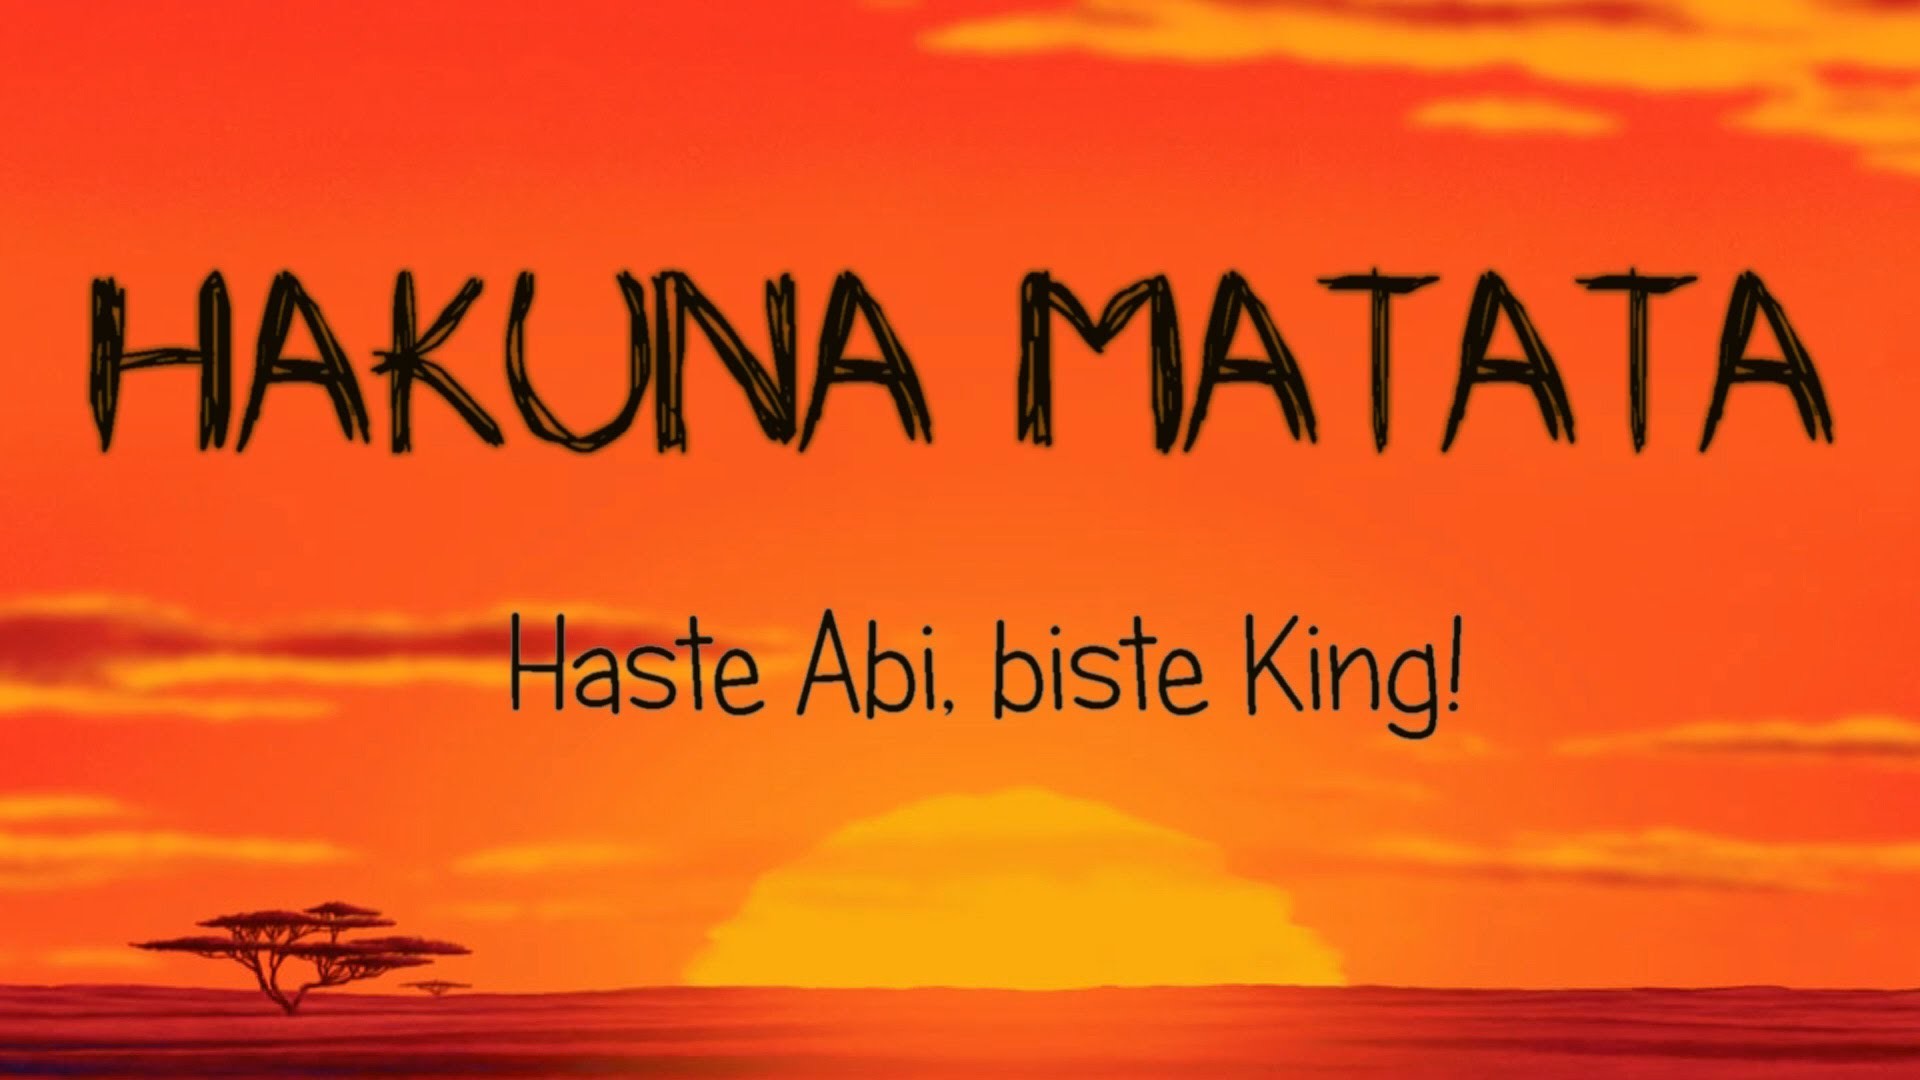 1920x1080 Hakuna Matata - Haste Abi, biste King! Trailer Abi-Aid 2014 NGK